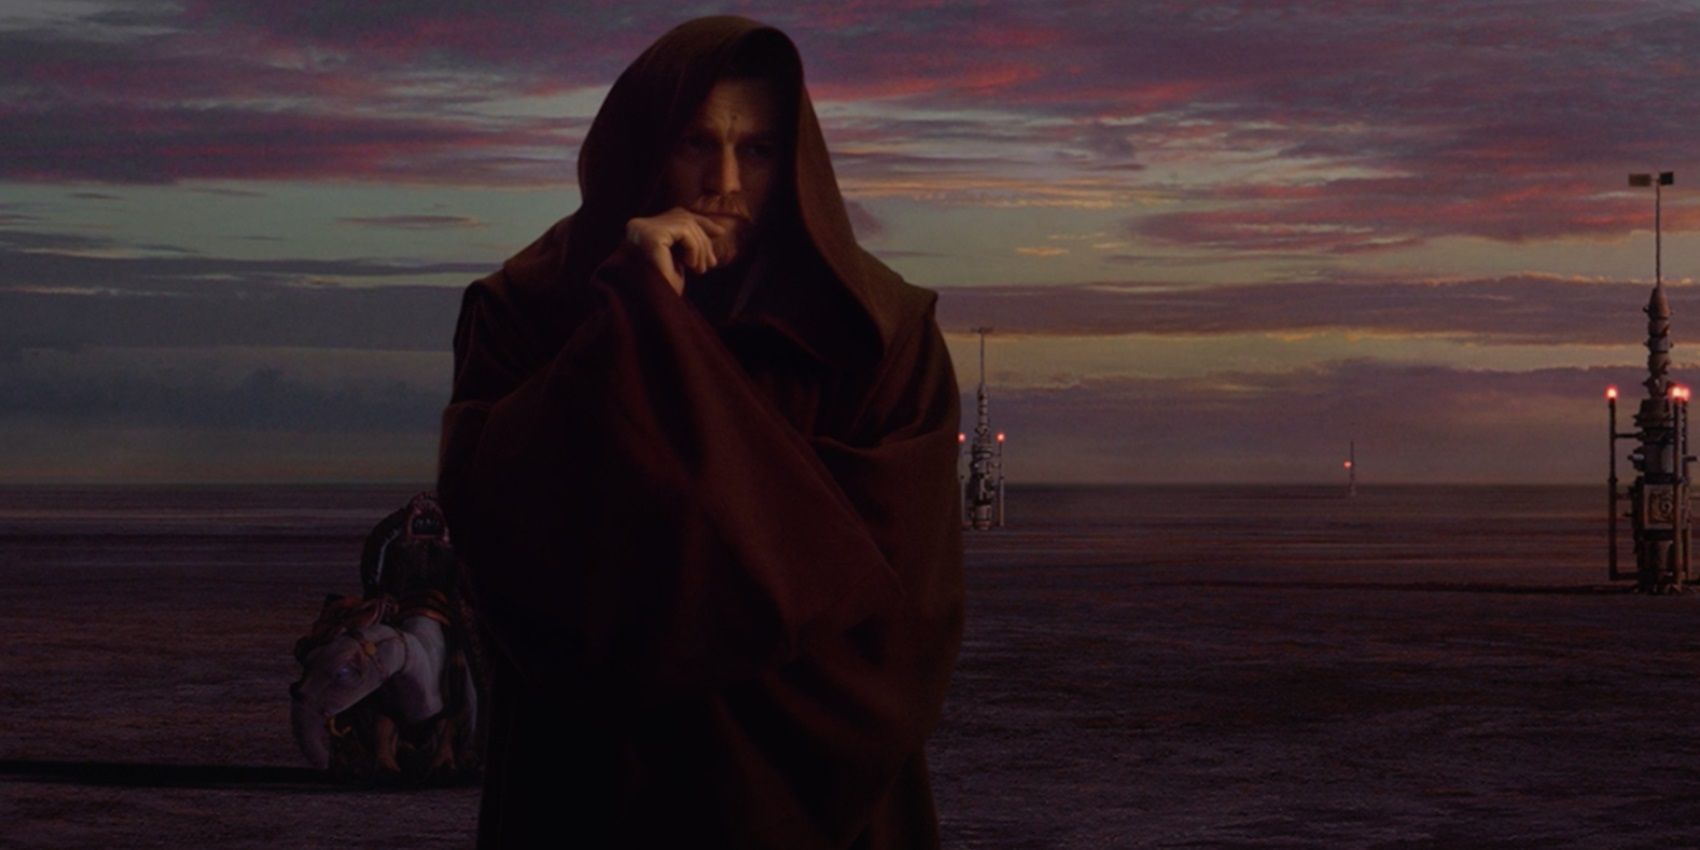 Obi-Wan leaves Luke on Tatooine in Star Wars Episode III Revenge of the Sith